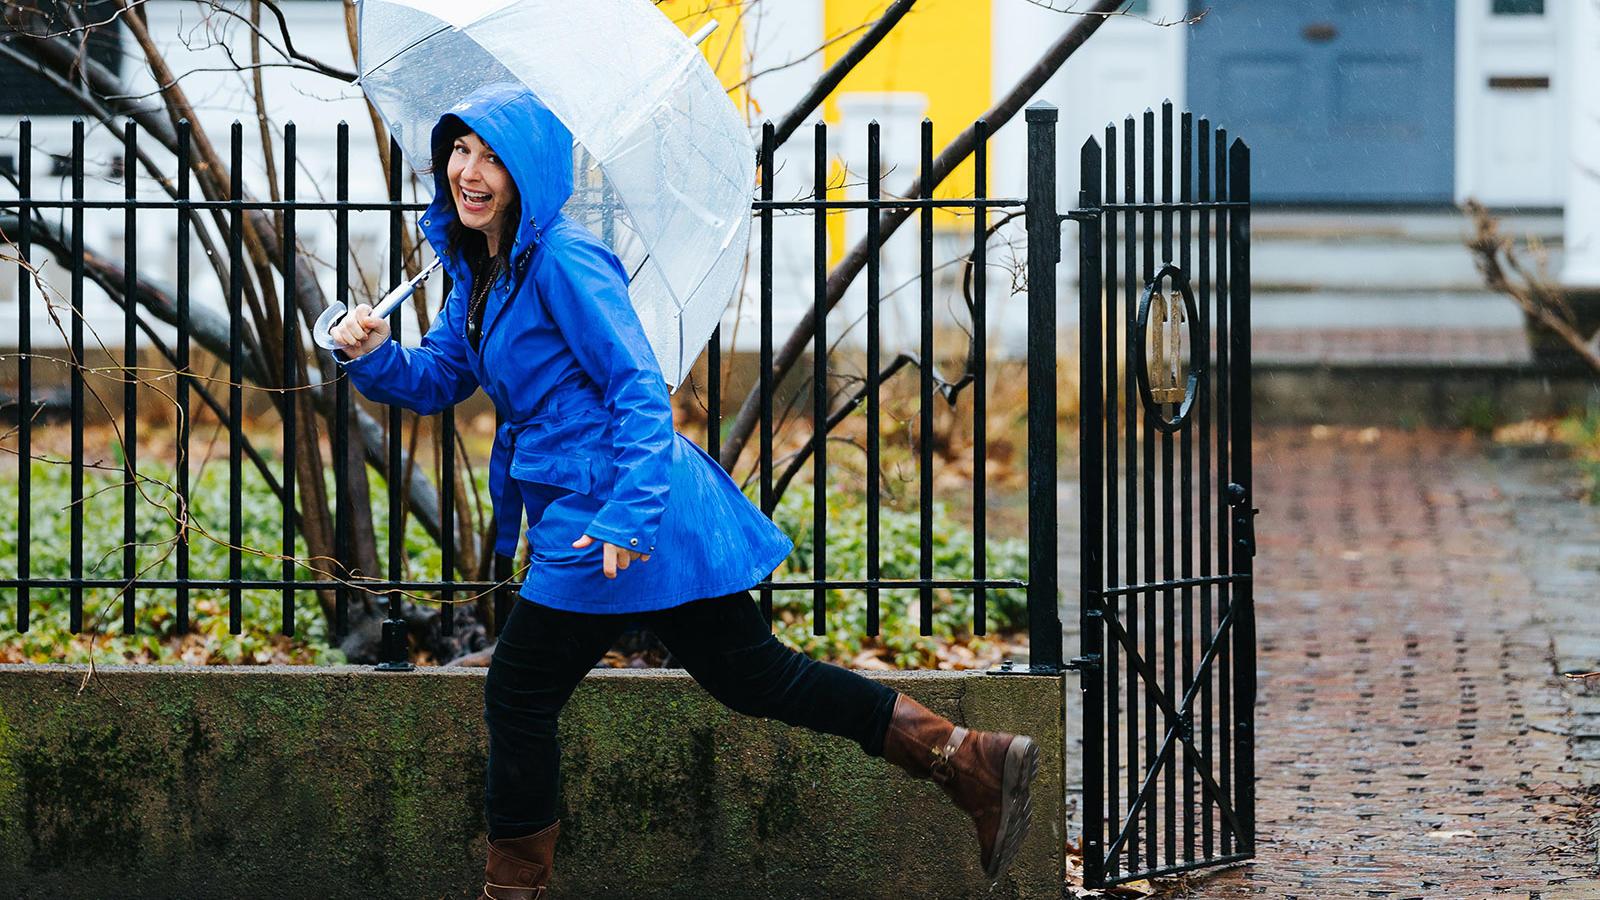 Sarah B. 米勒打着伞在雨中跳跃